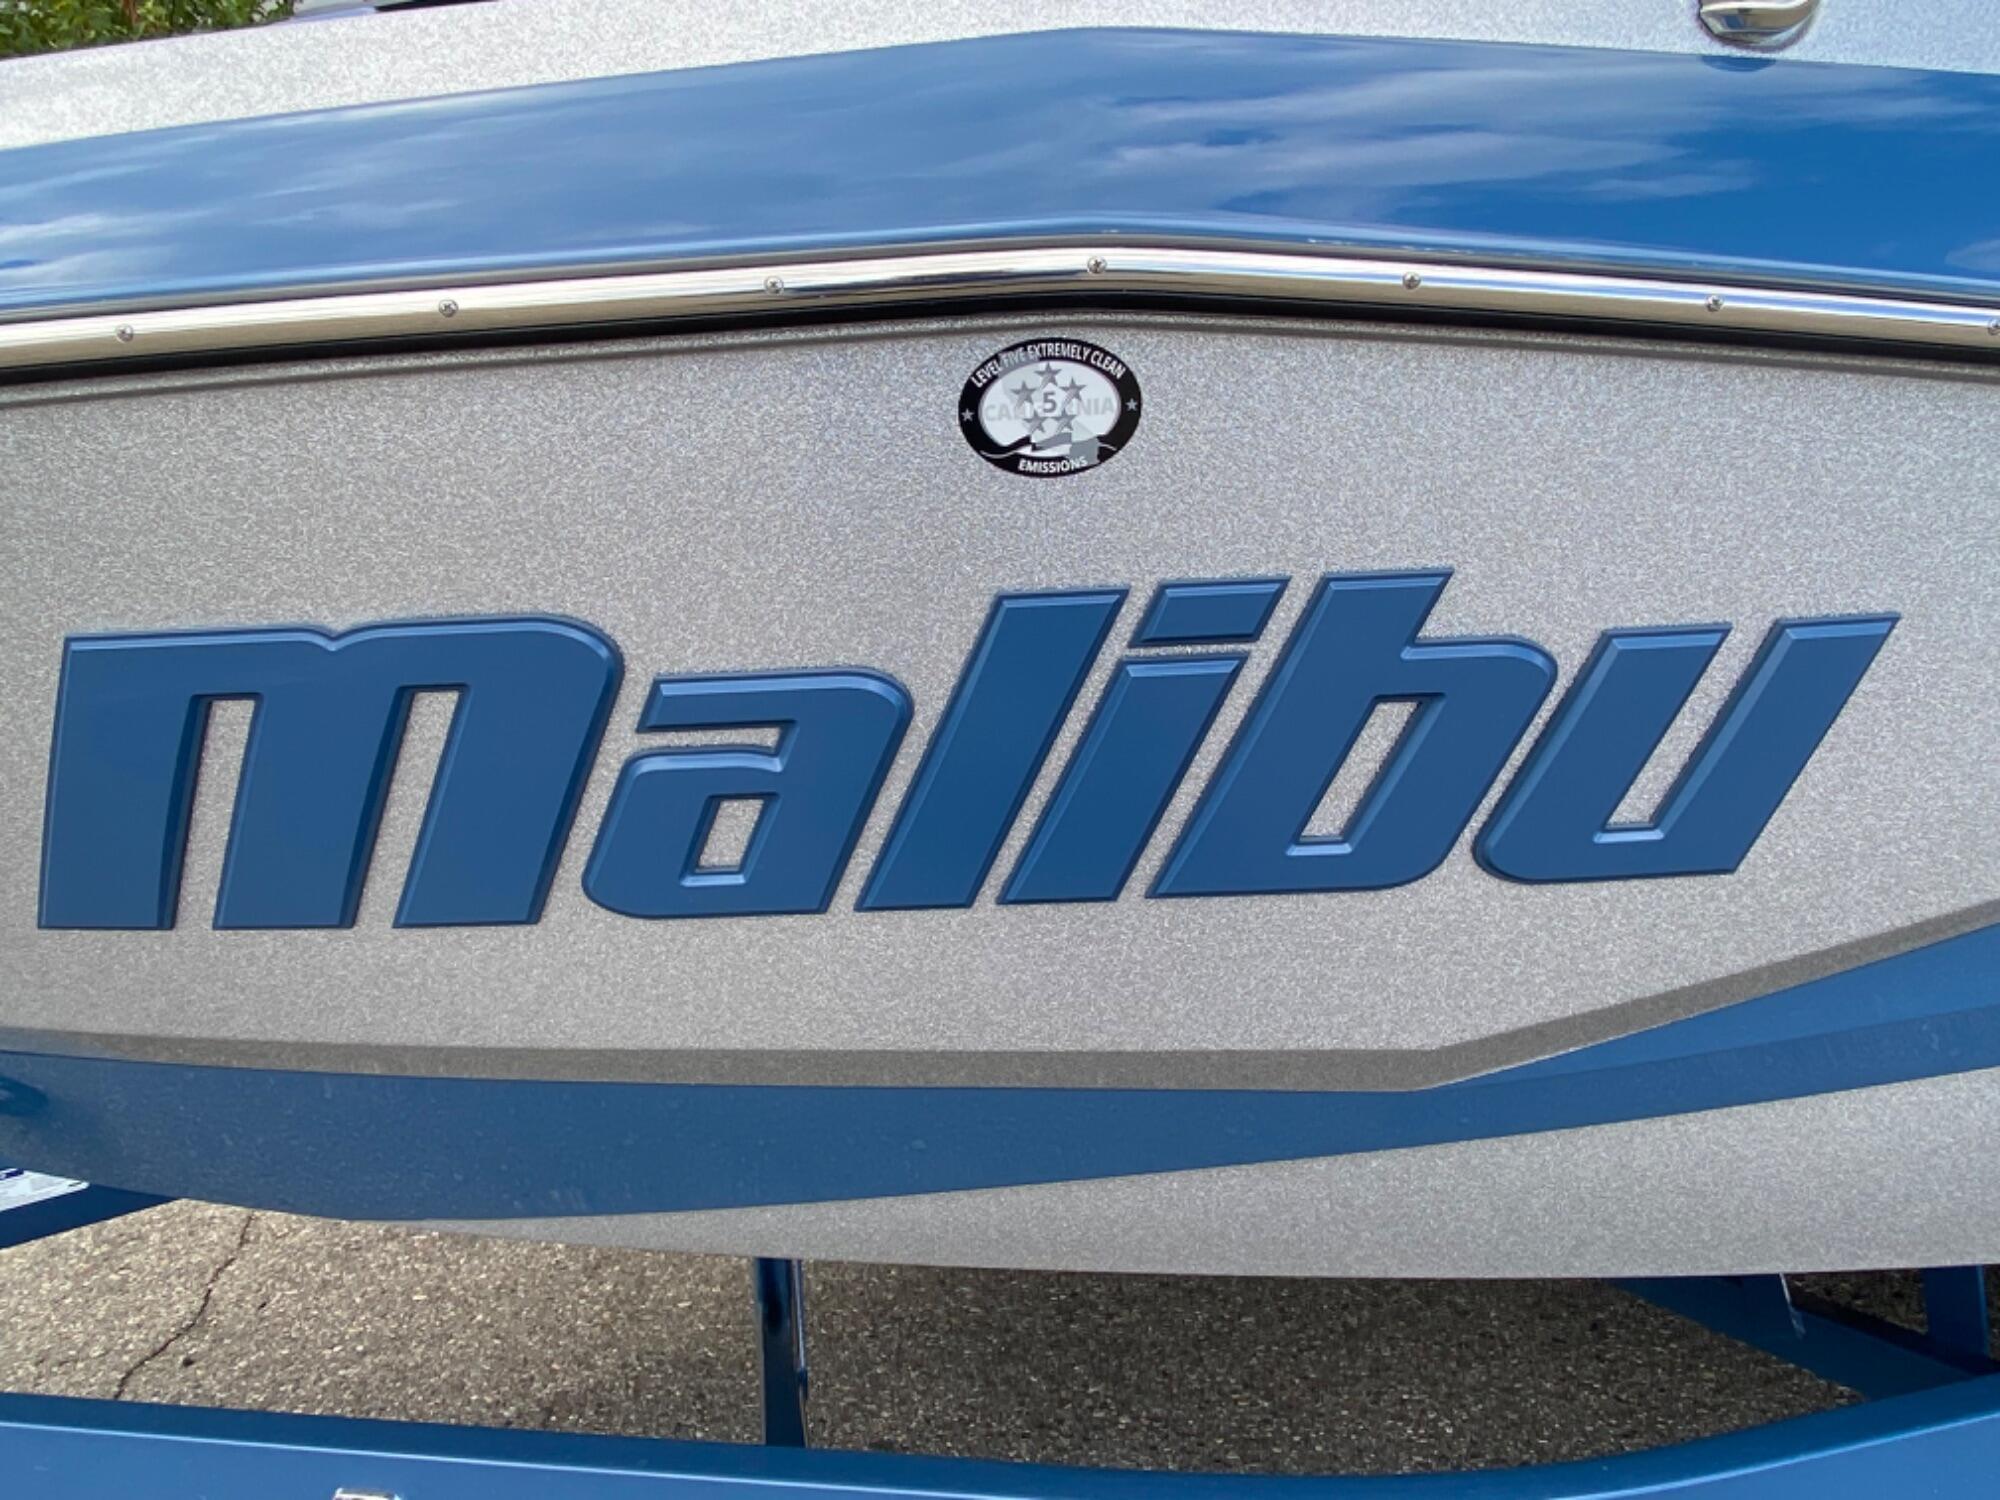 2023 Malibu 22 LSV